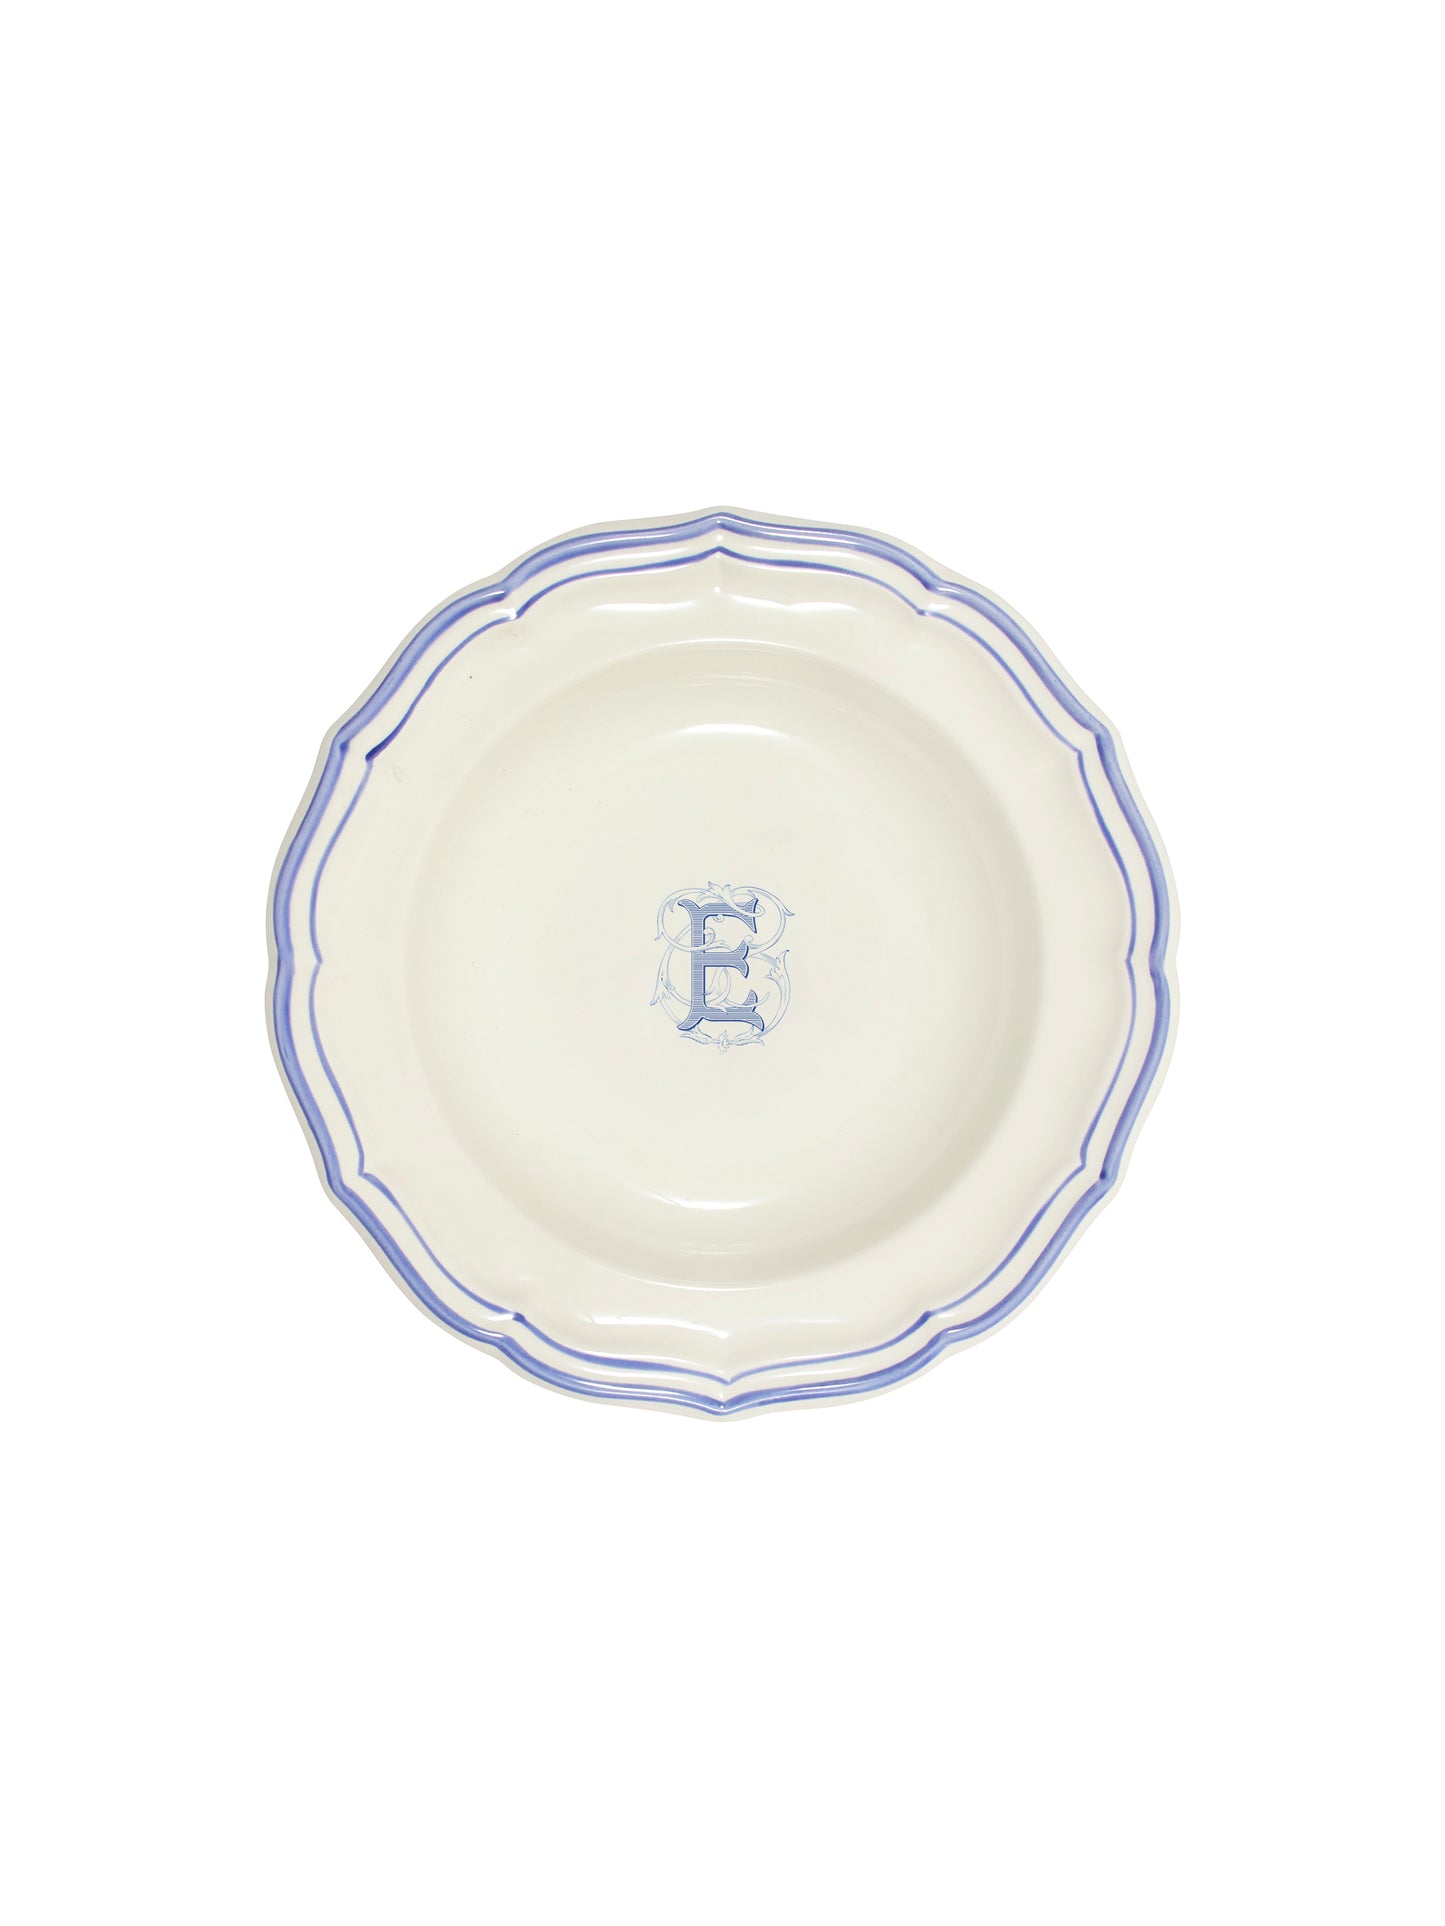 Gien Filet Bleu Monogram Soup Plate E Weston Table